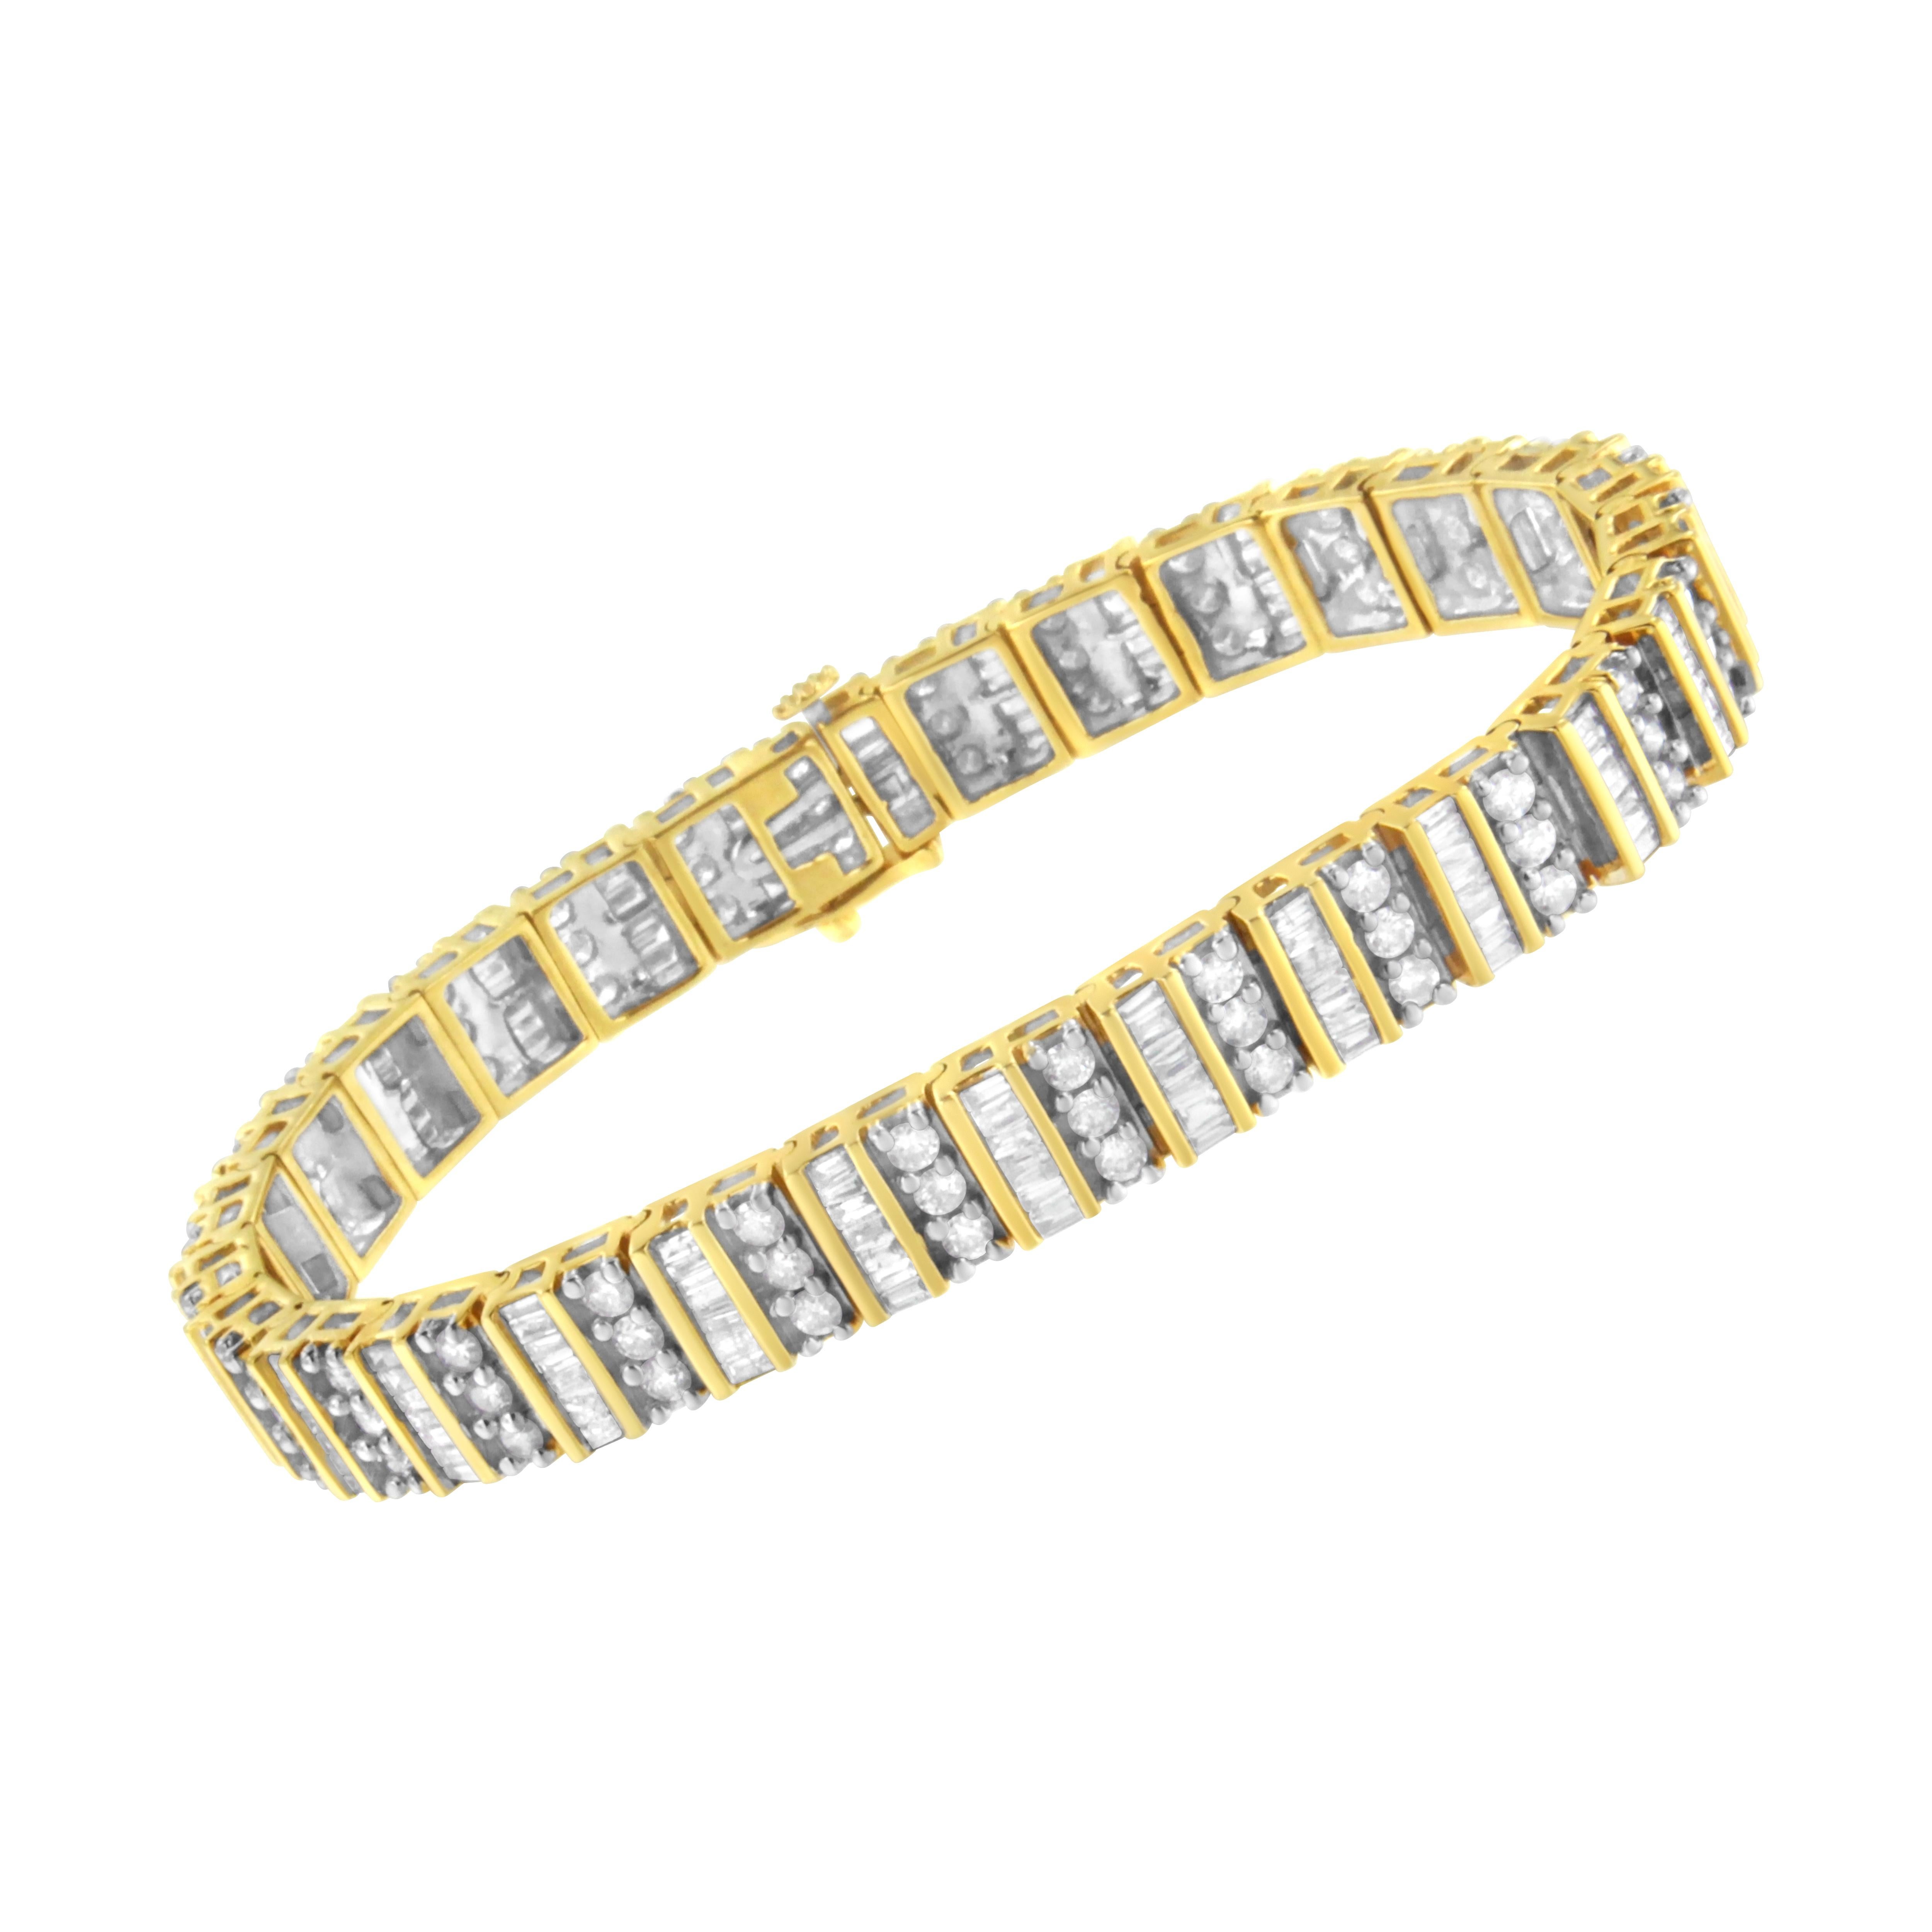 5 carat diamond tennis bracelet 14k yellow gold